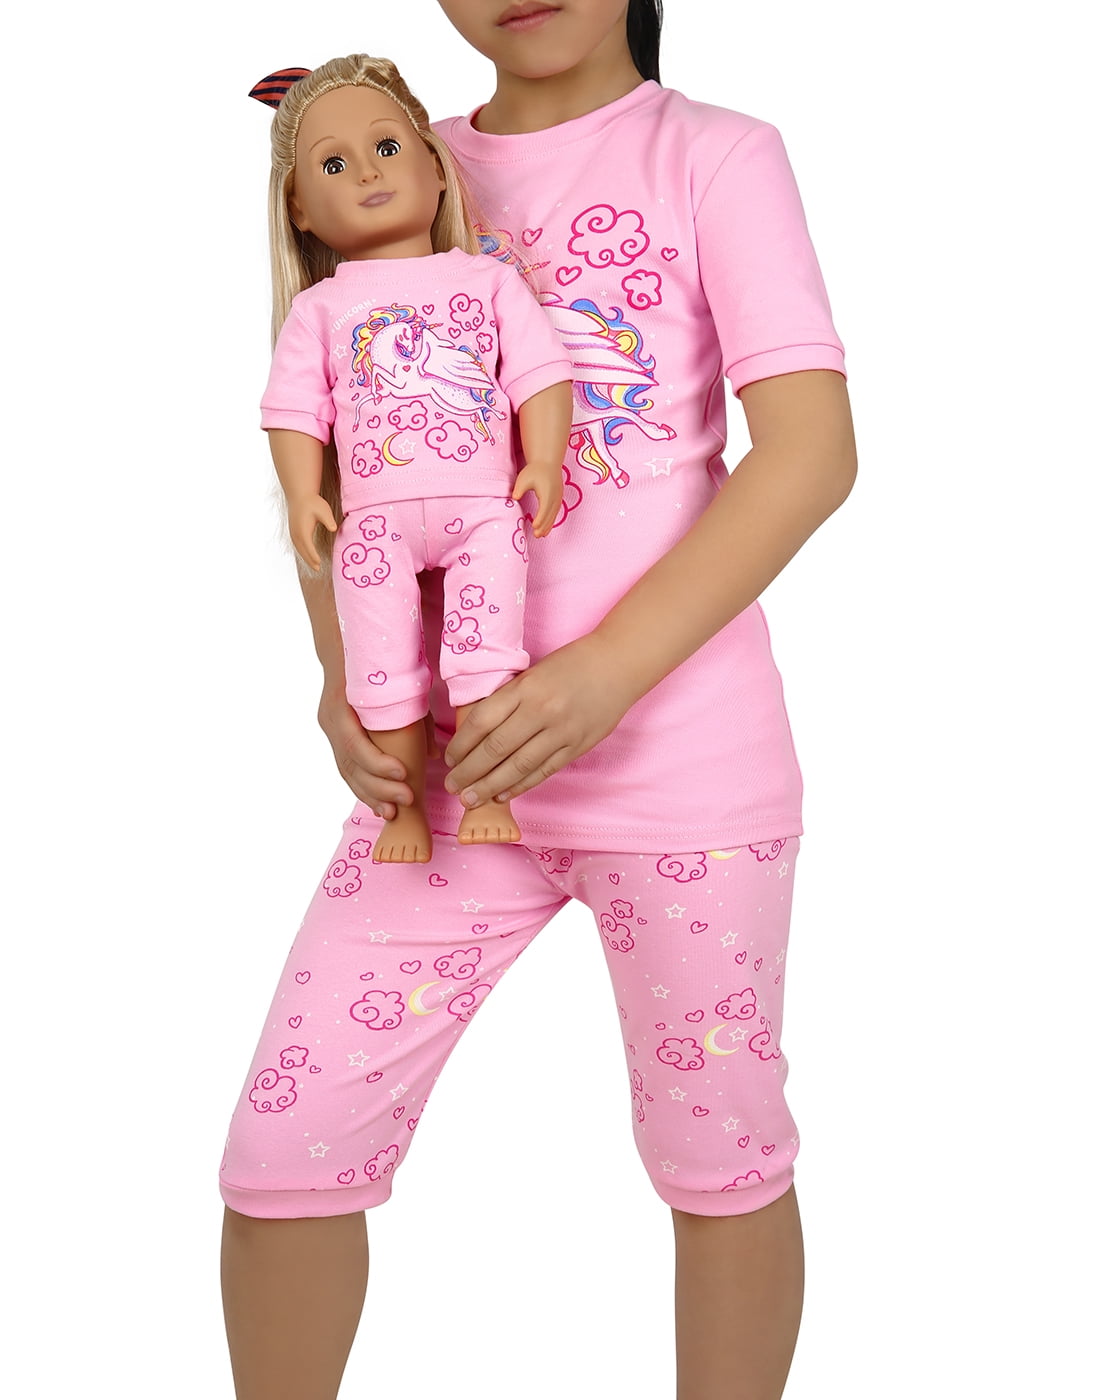 Girls Short Pajamas Snug Fit Sleepwear 100% Cotton Summer Toddler Pjs Clothes Shirts